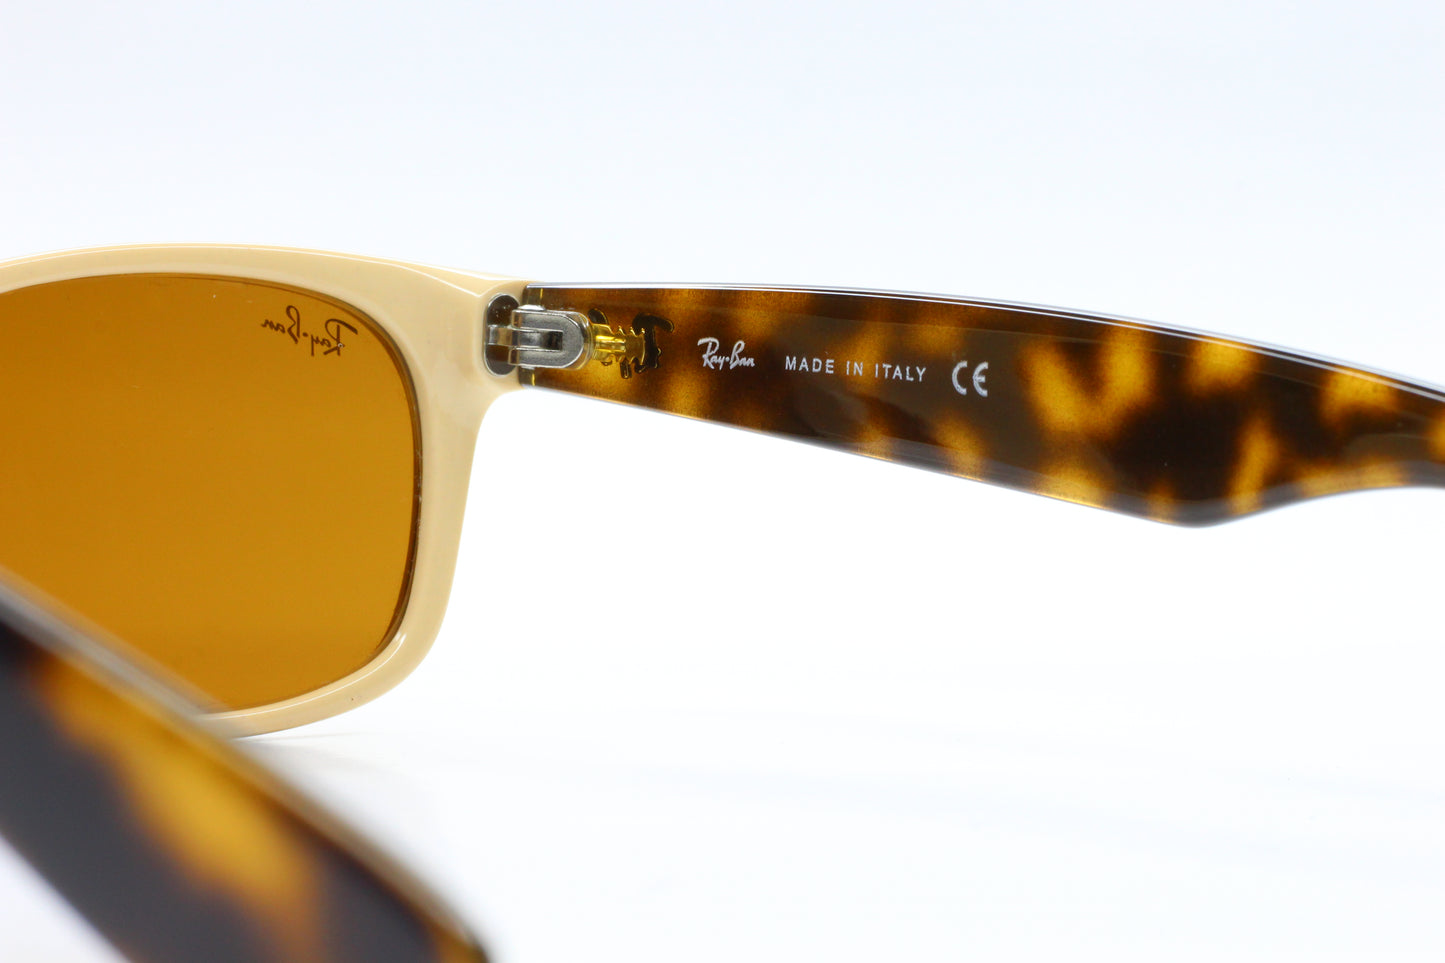 Ray-Ban RB2132 721 Cream Brown Wayfarer Italy Sunglasses